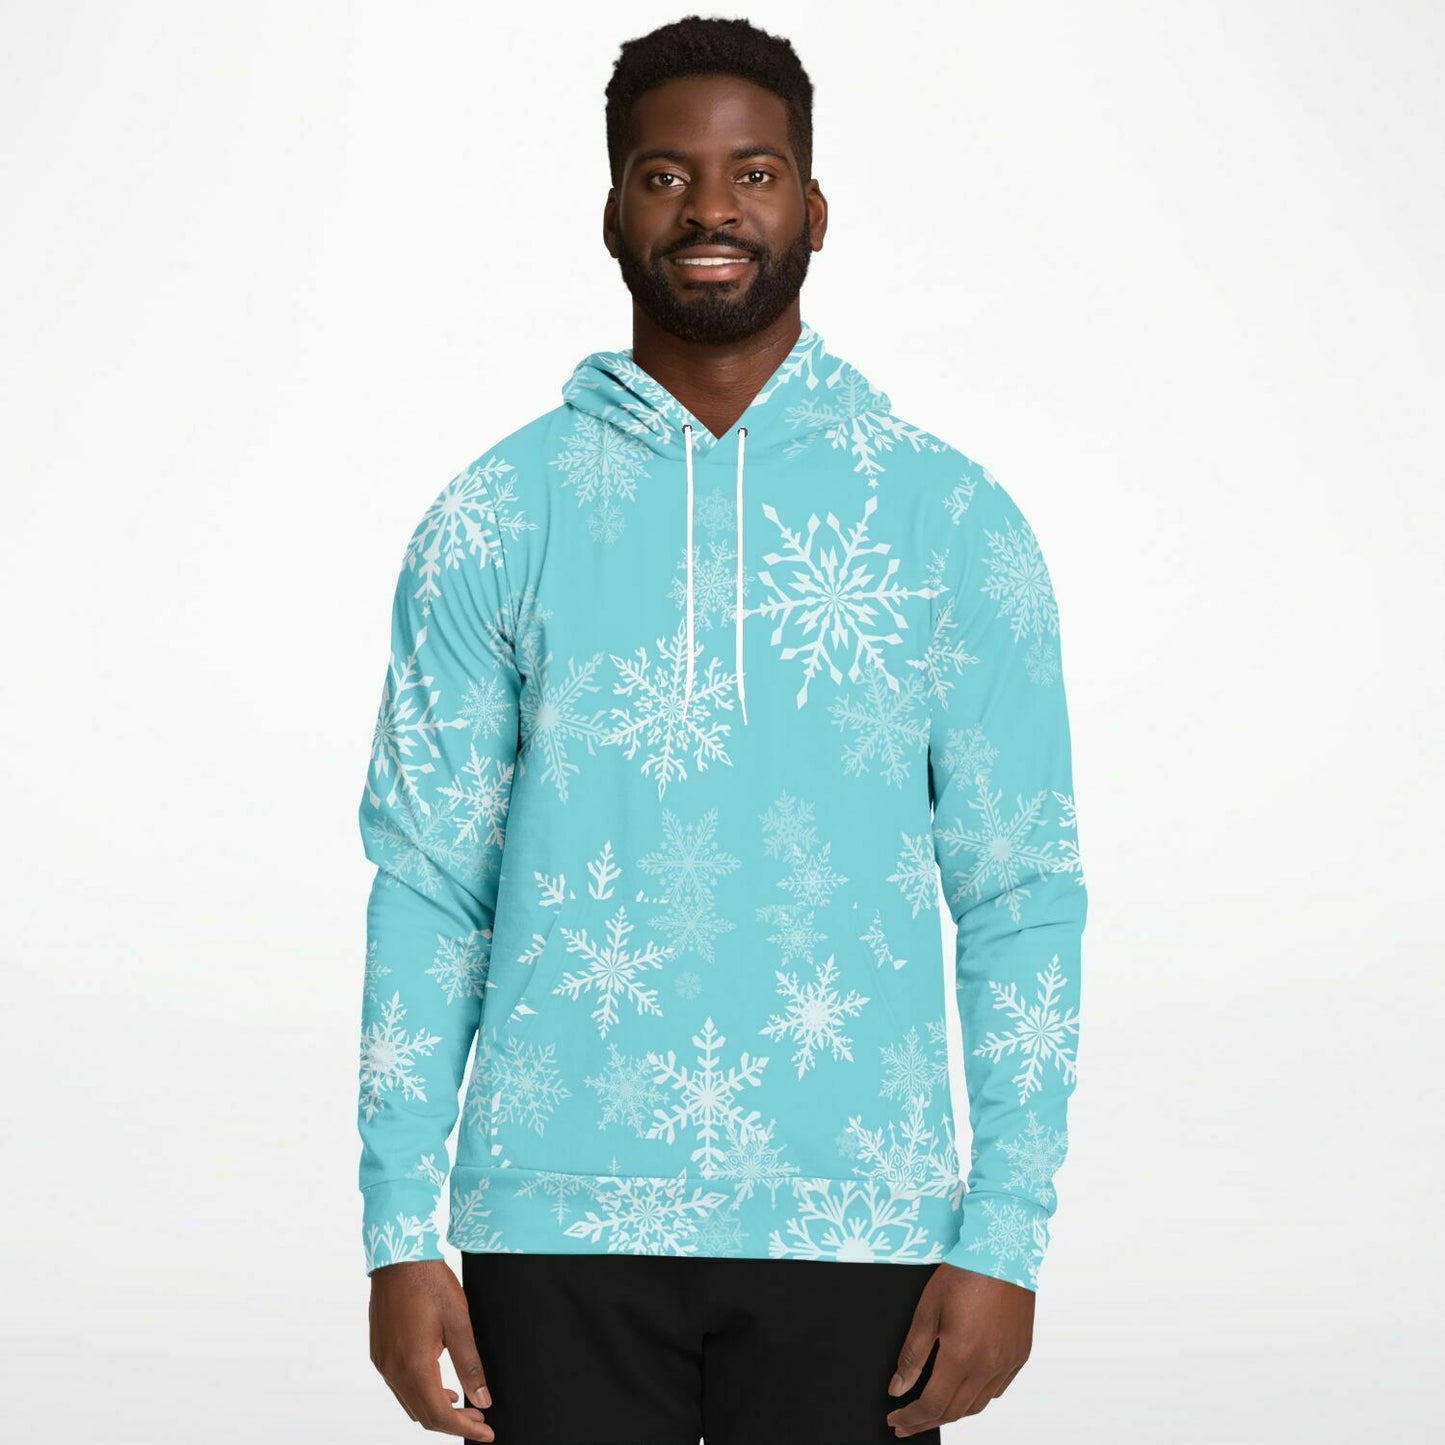 Athletic Hoodie, Snowflake Design, Snow Season, Christmas Season, Winter Season